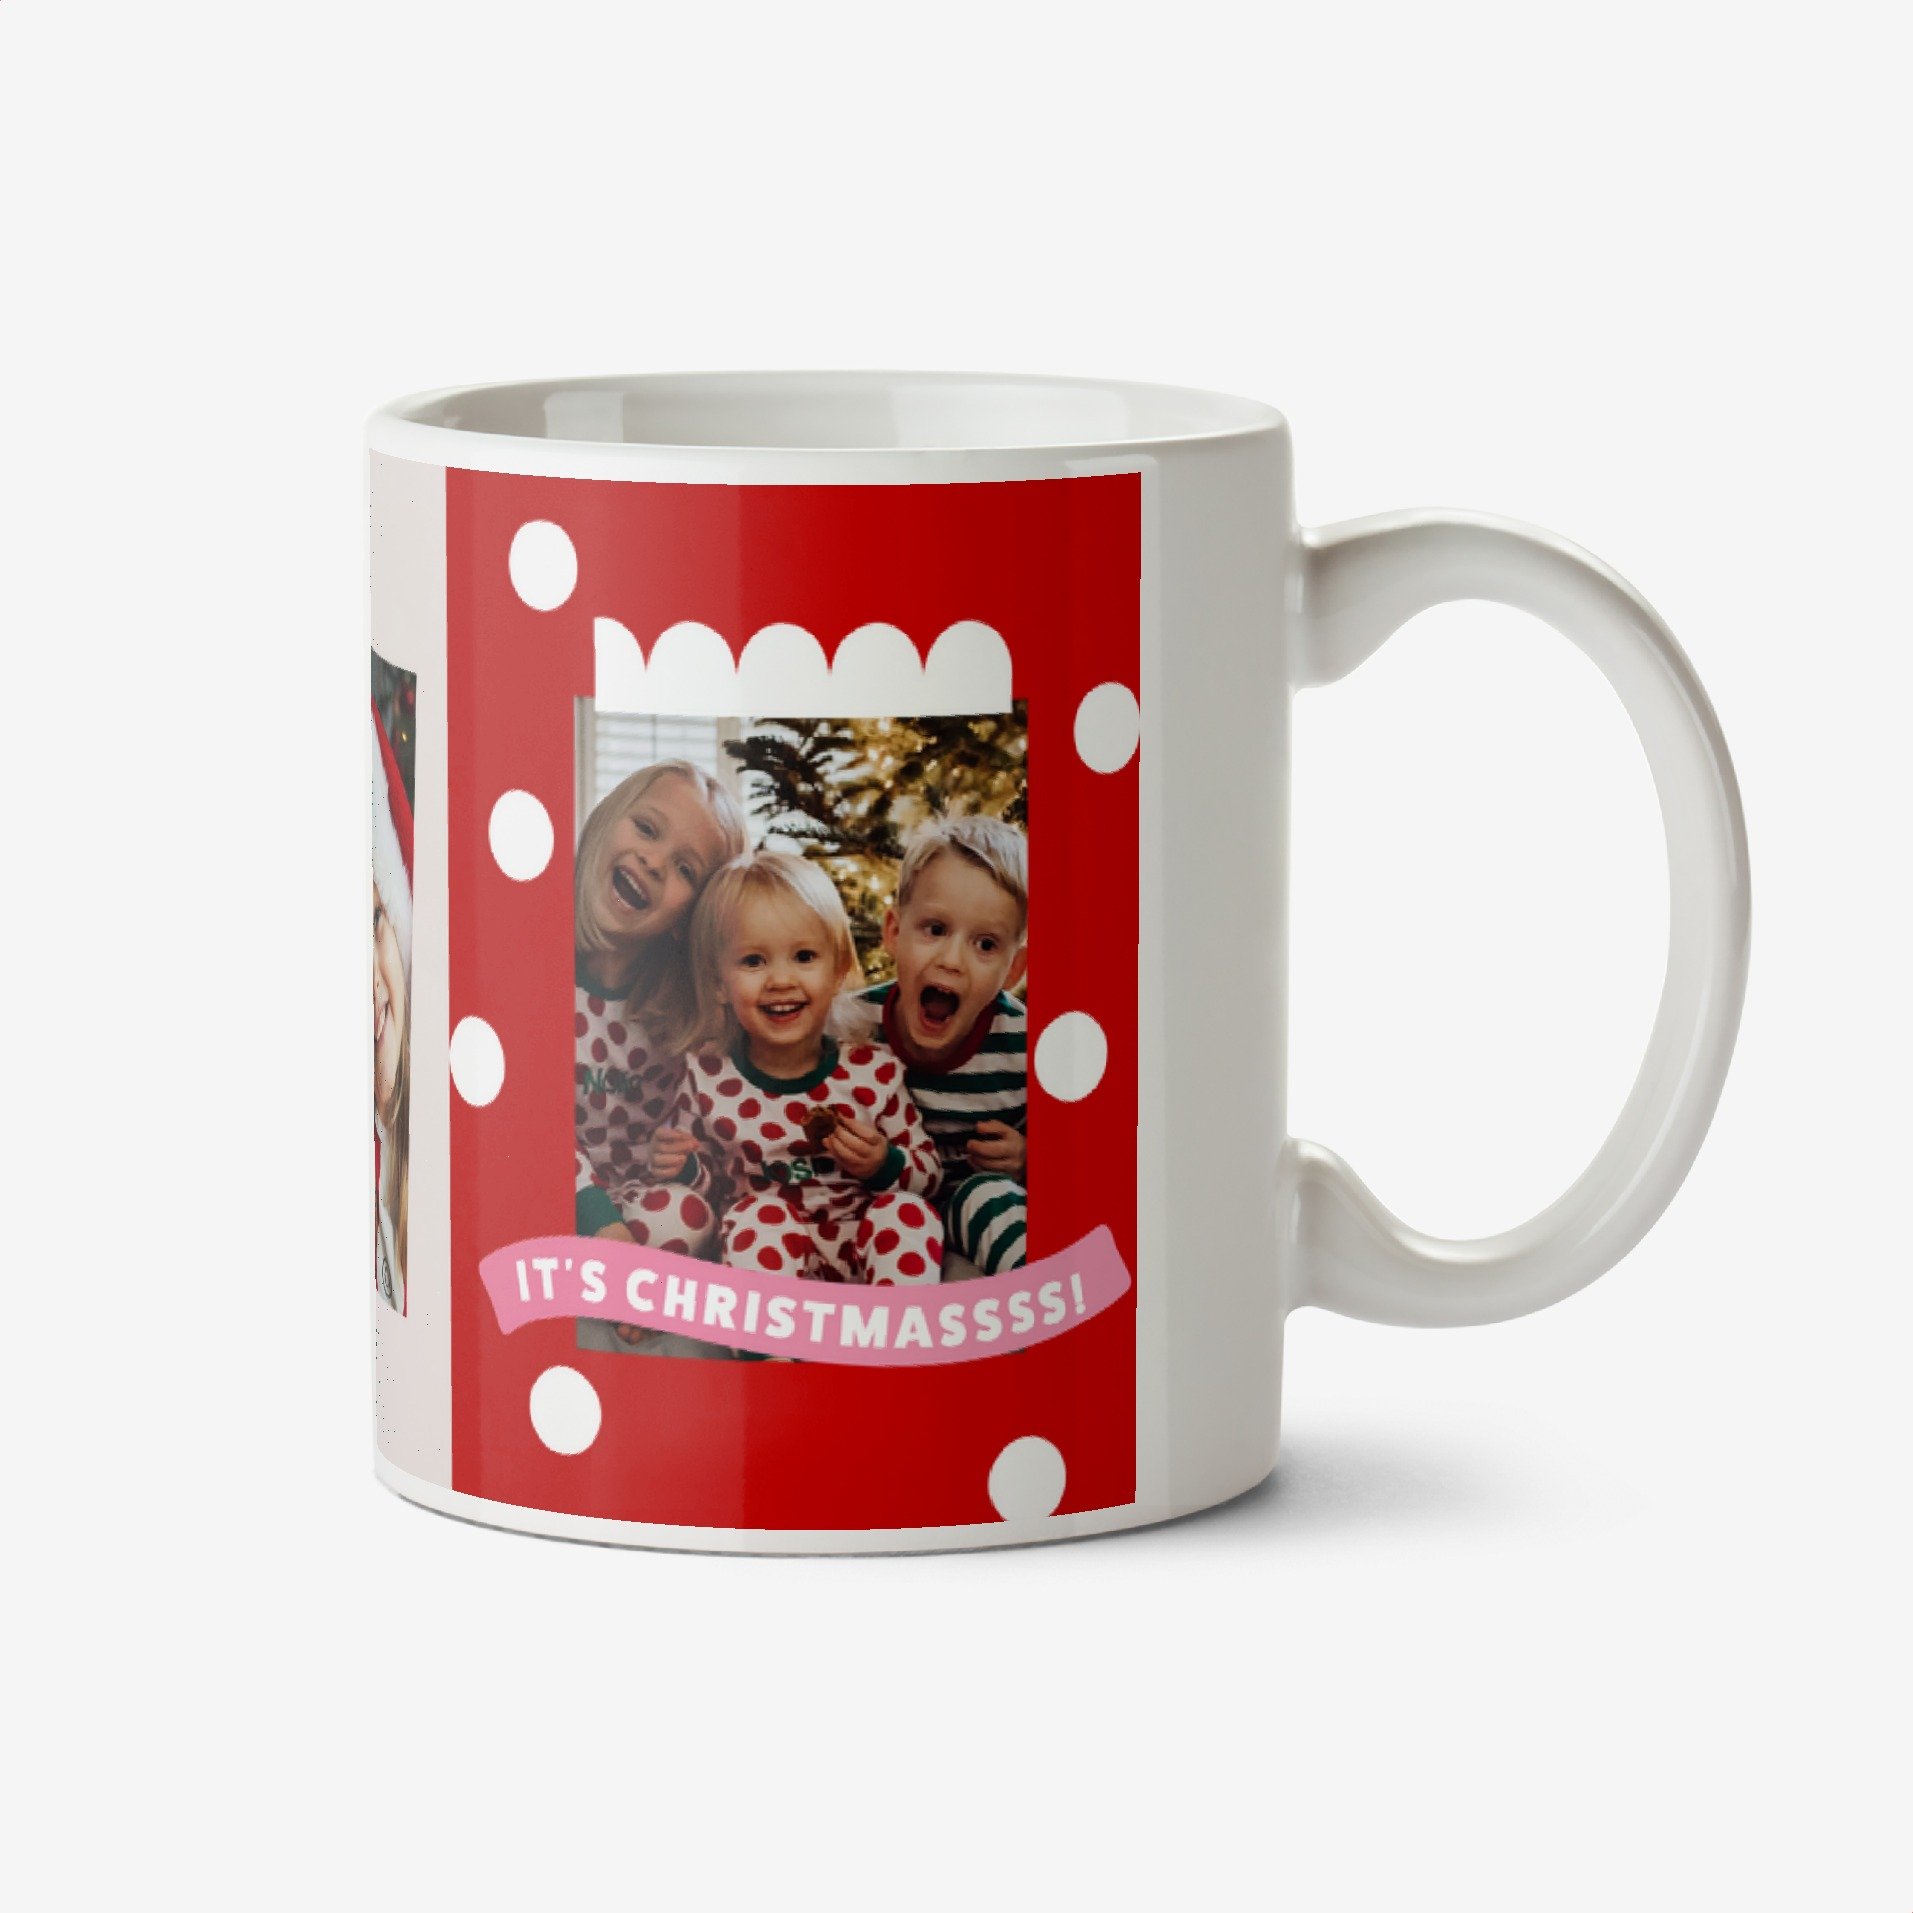 Moonpig Fun And Festive Its Christmassss Illustrated Santa Photo Upload Mug Ceramic Mug